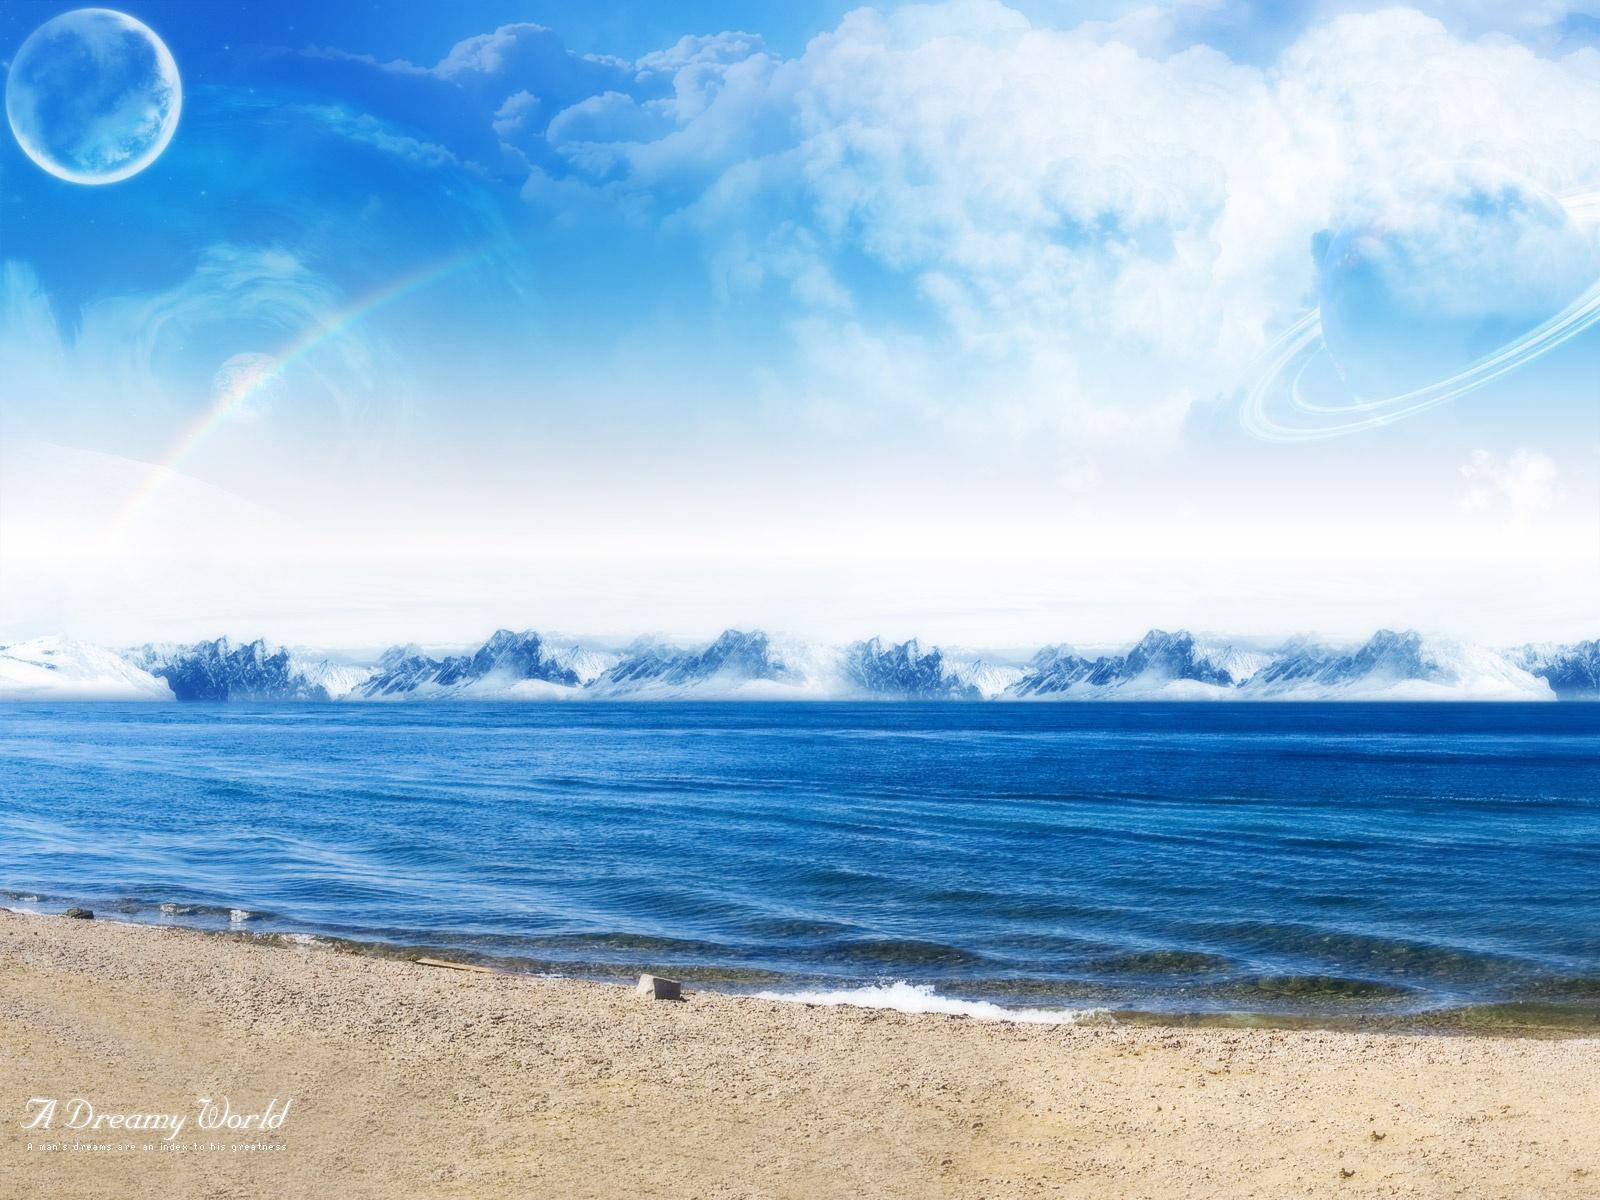 Sea Shore Dreamy World Wallpaper in jpg format for free